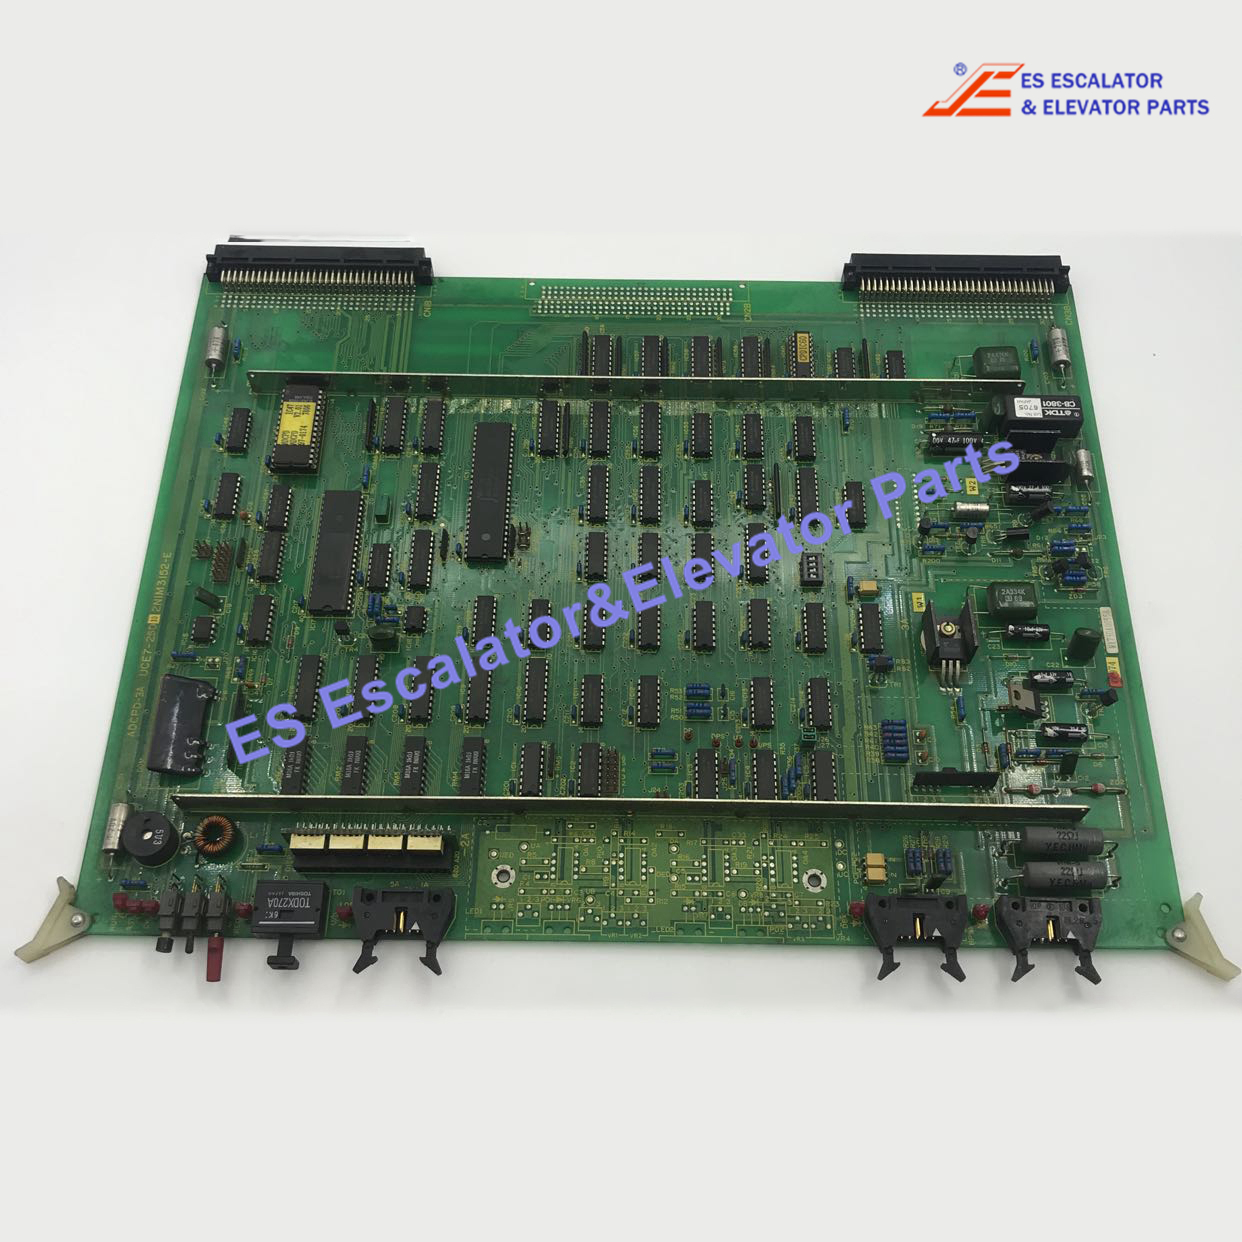 "Toshiba ADCPD-3A Elevator CV60 Motherboard  Encoding control board Use For Thyssen"